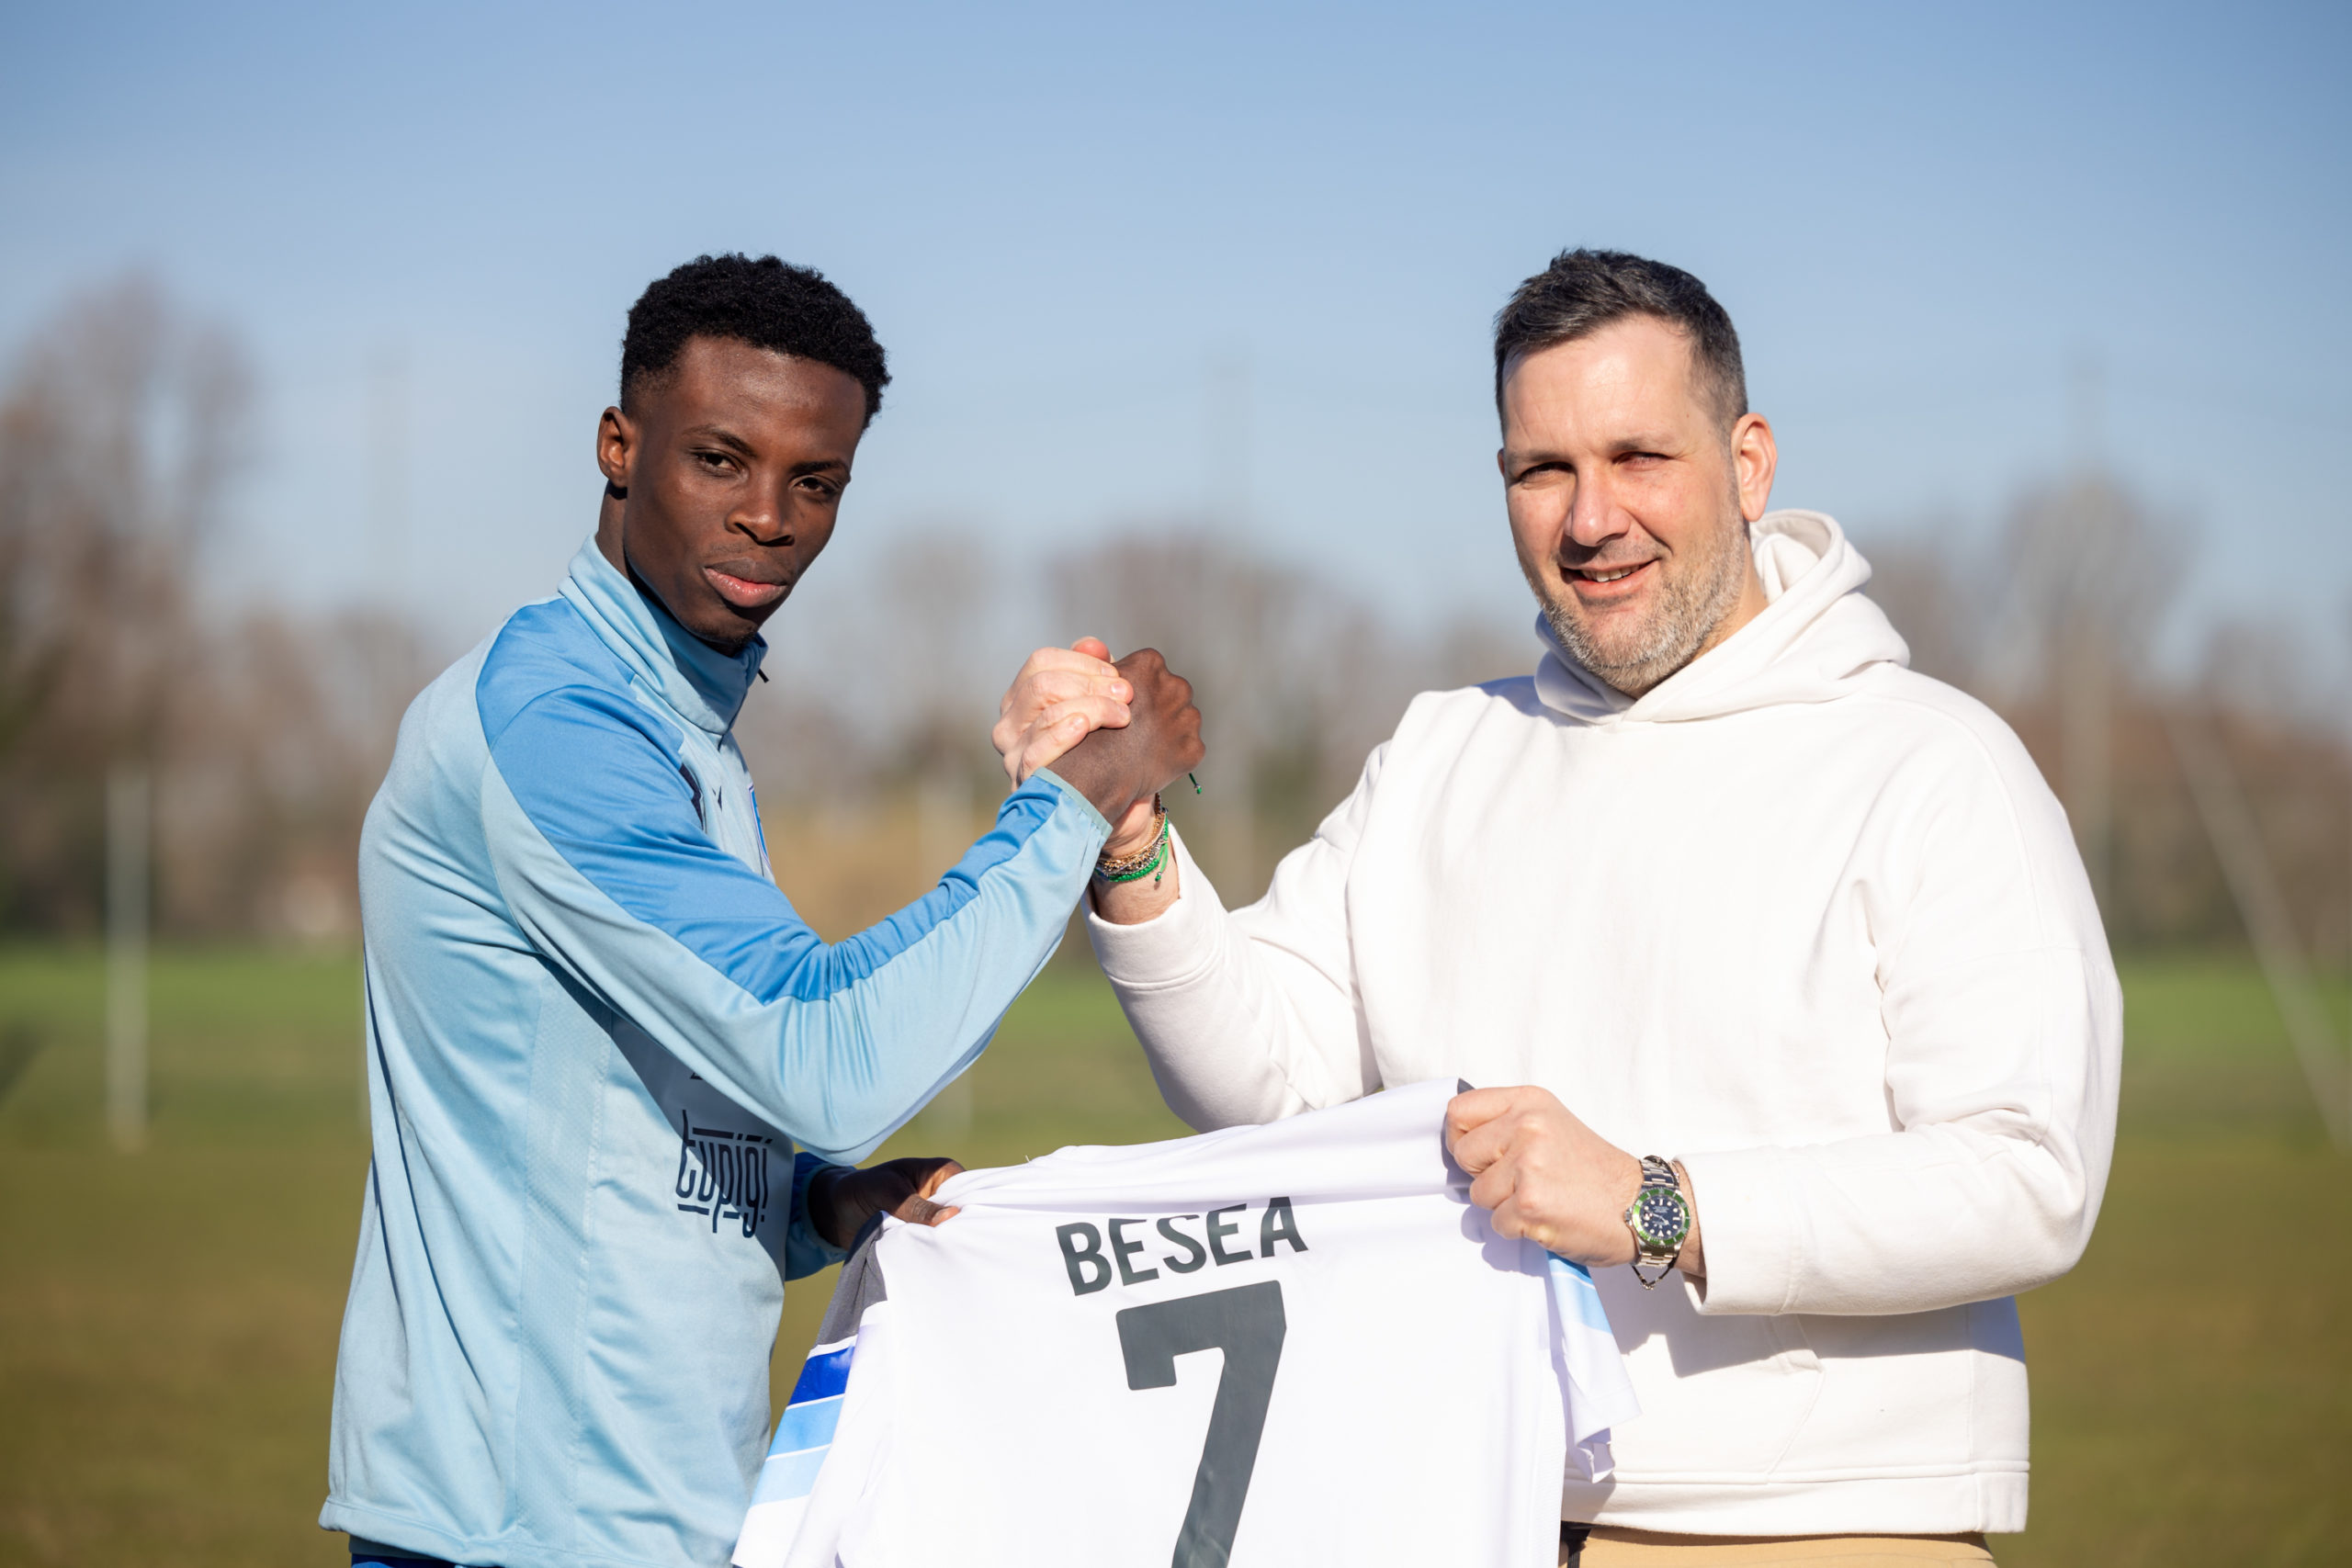 Midfielder Prince Emmanuel Besea joins United Riccione